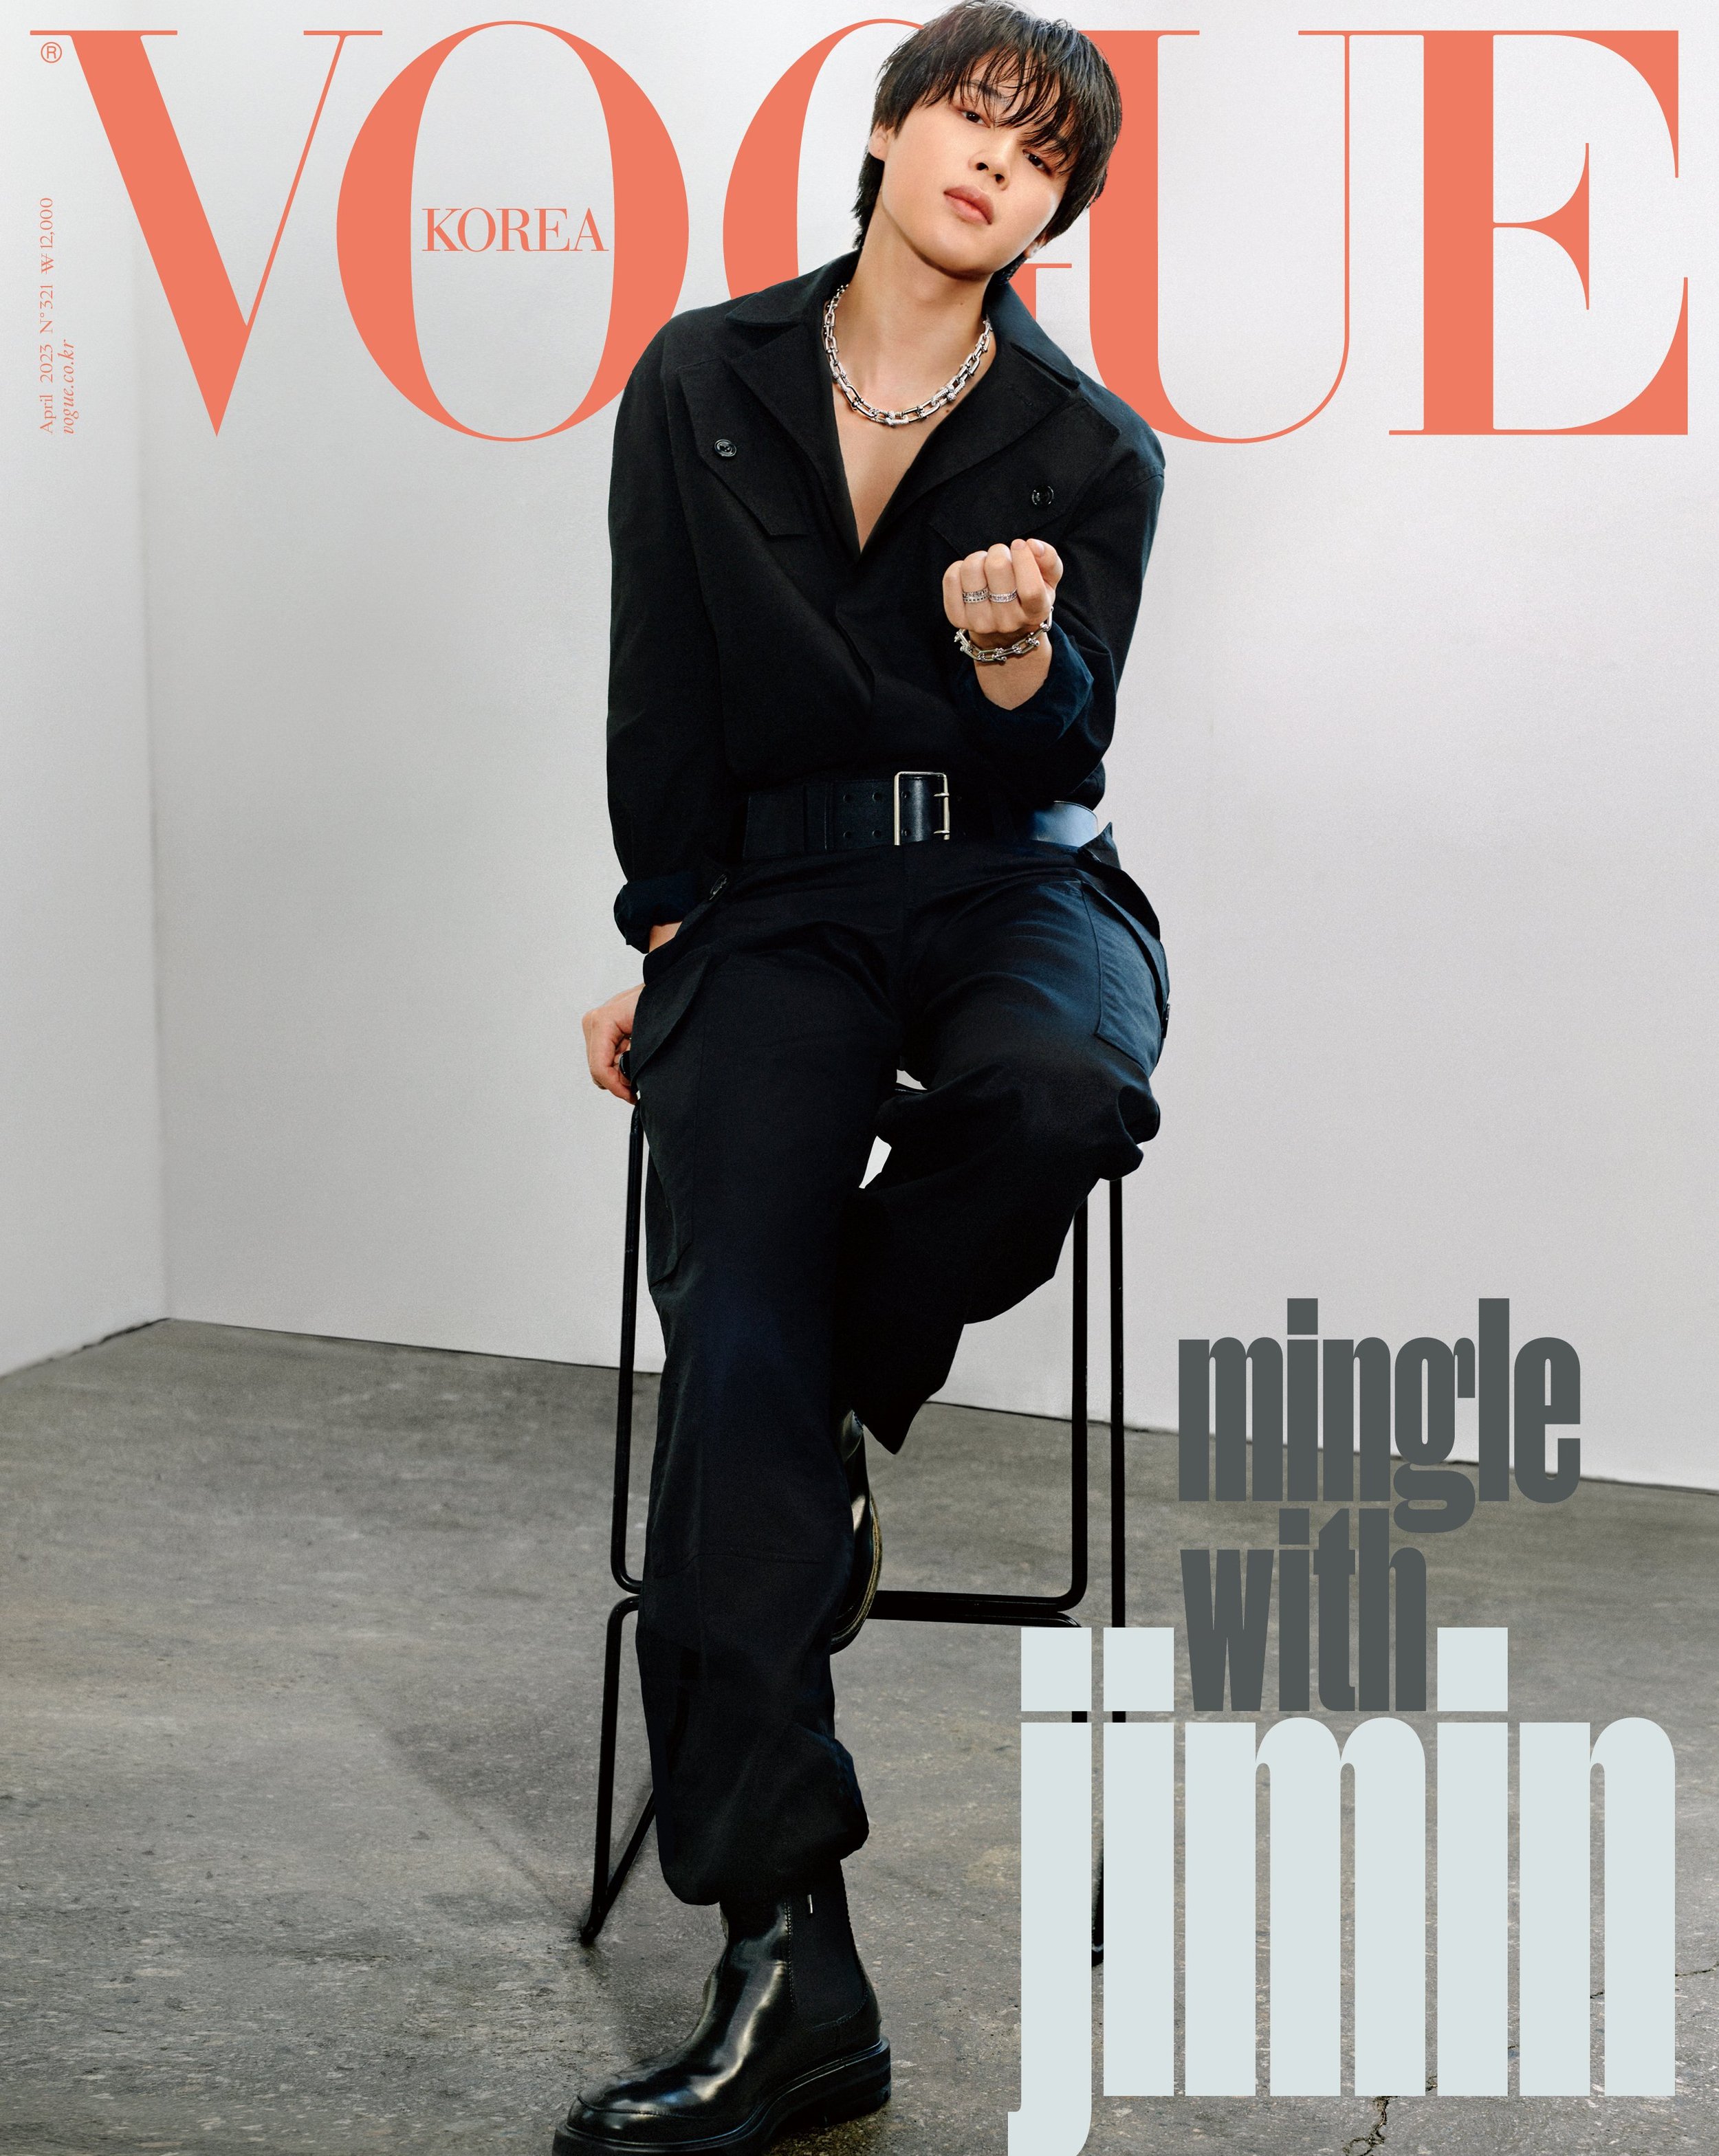 Vogue Korea released new photos & interview with Jimin! (Interview  uploaded, kindly check) #bts #jimin #vogue #voguekorea #parkjimin